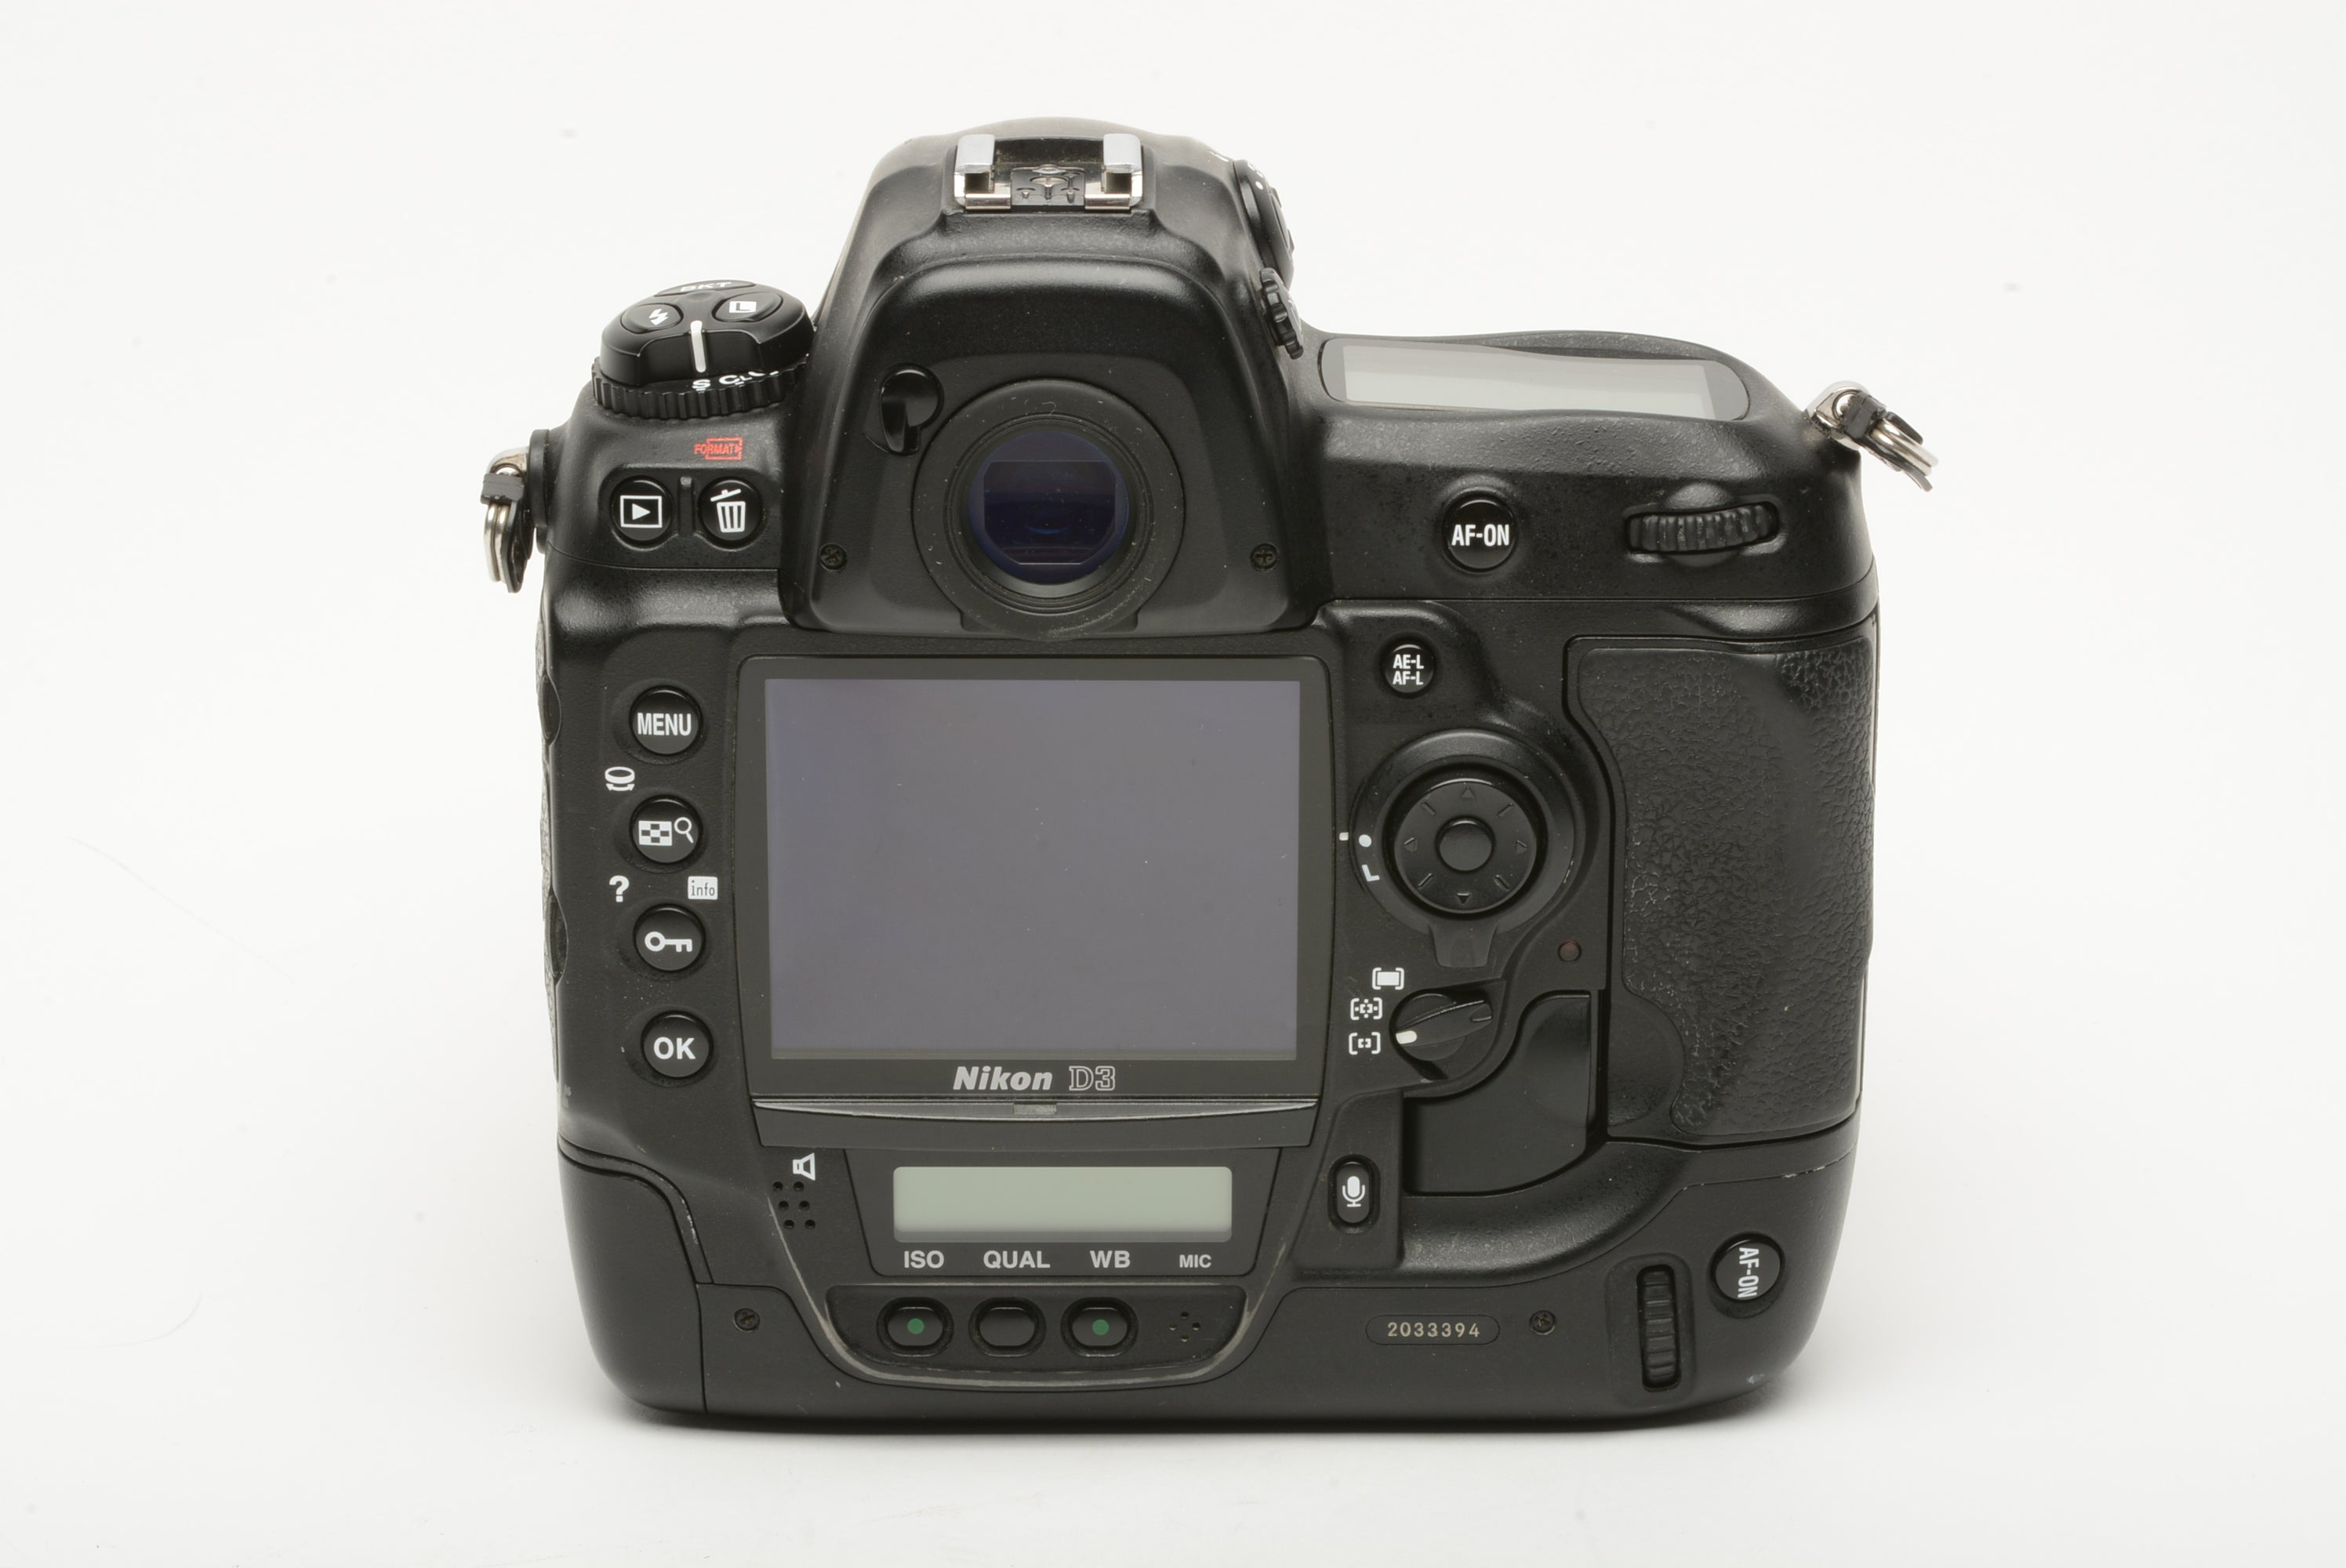 Nikon D3 12.1MP DSLR body, 2batts, charger, strap, manuals 73K